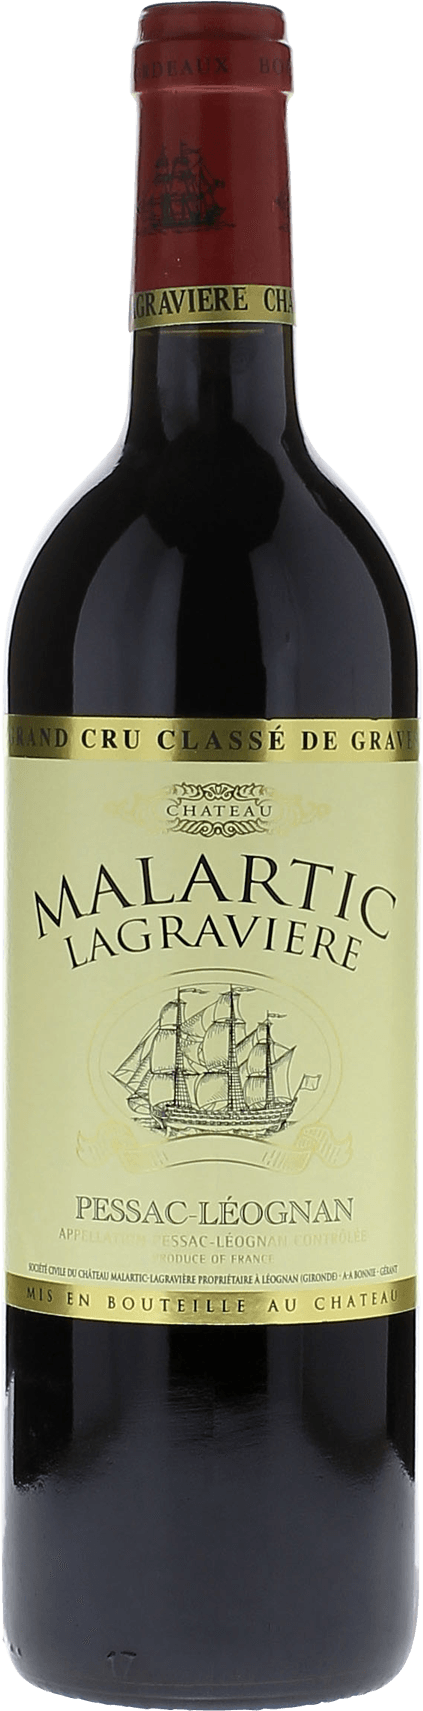 Malartic lagraviere rouge 2019 Grand Cru Class Graves, Bordeaux rouge